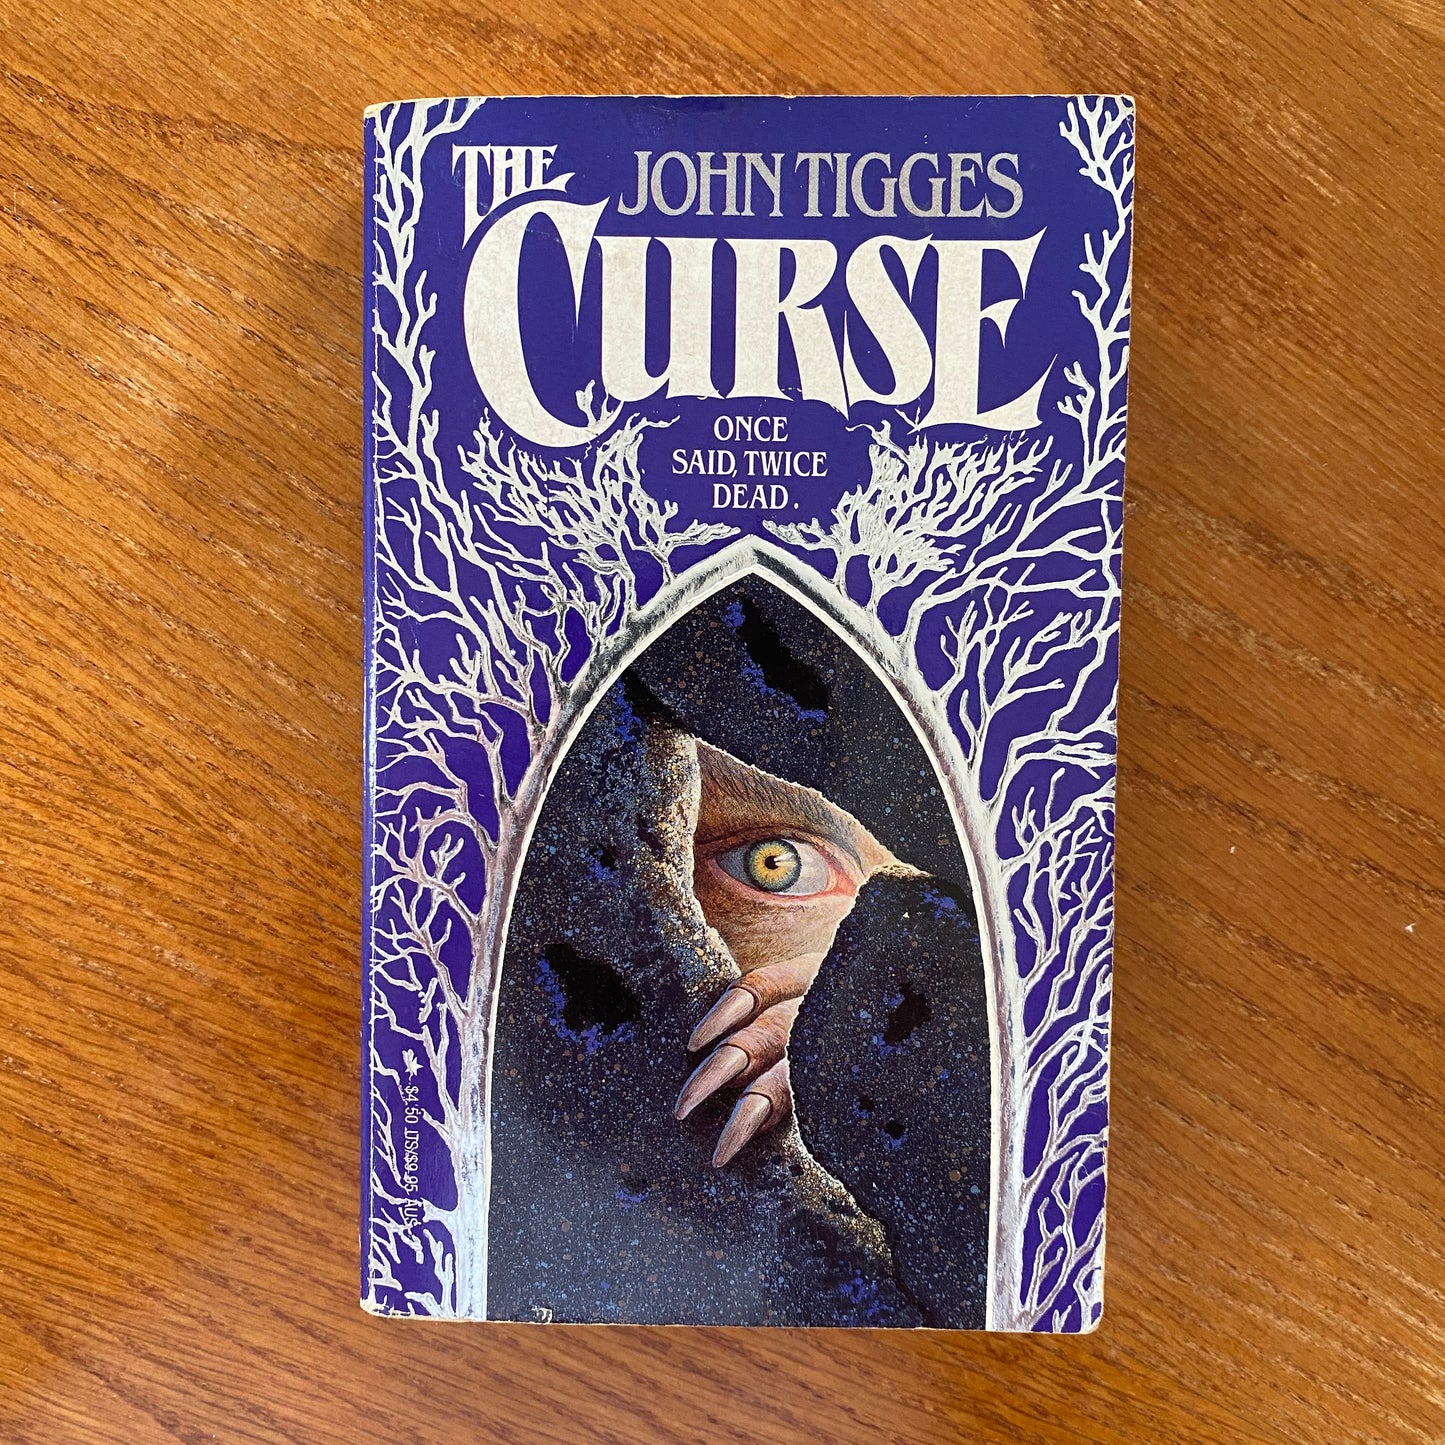 The Curse - John Tigges